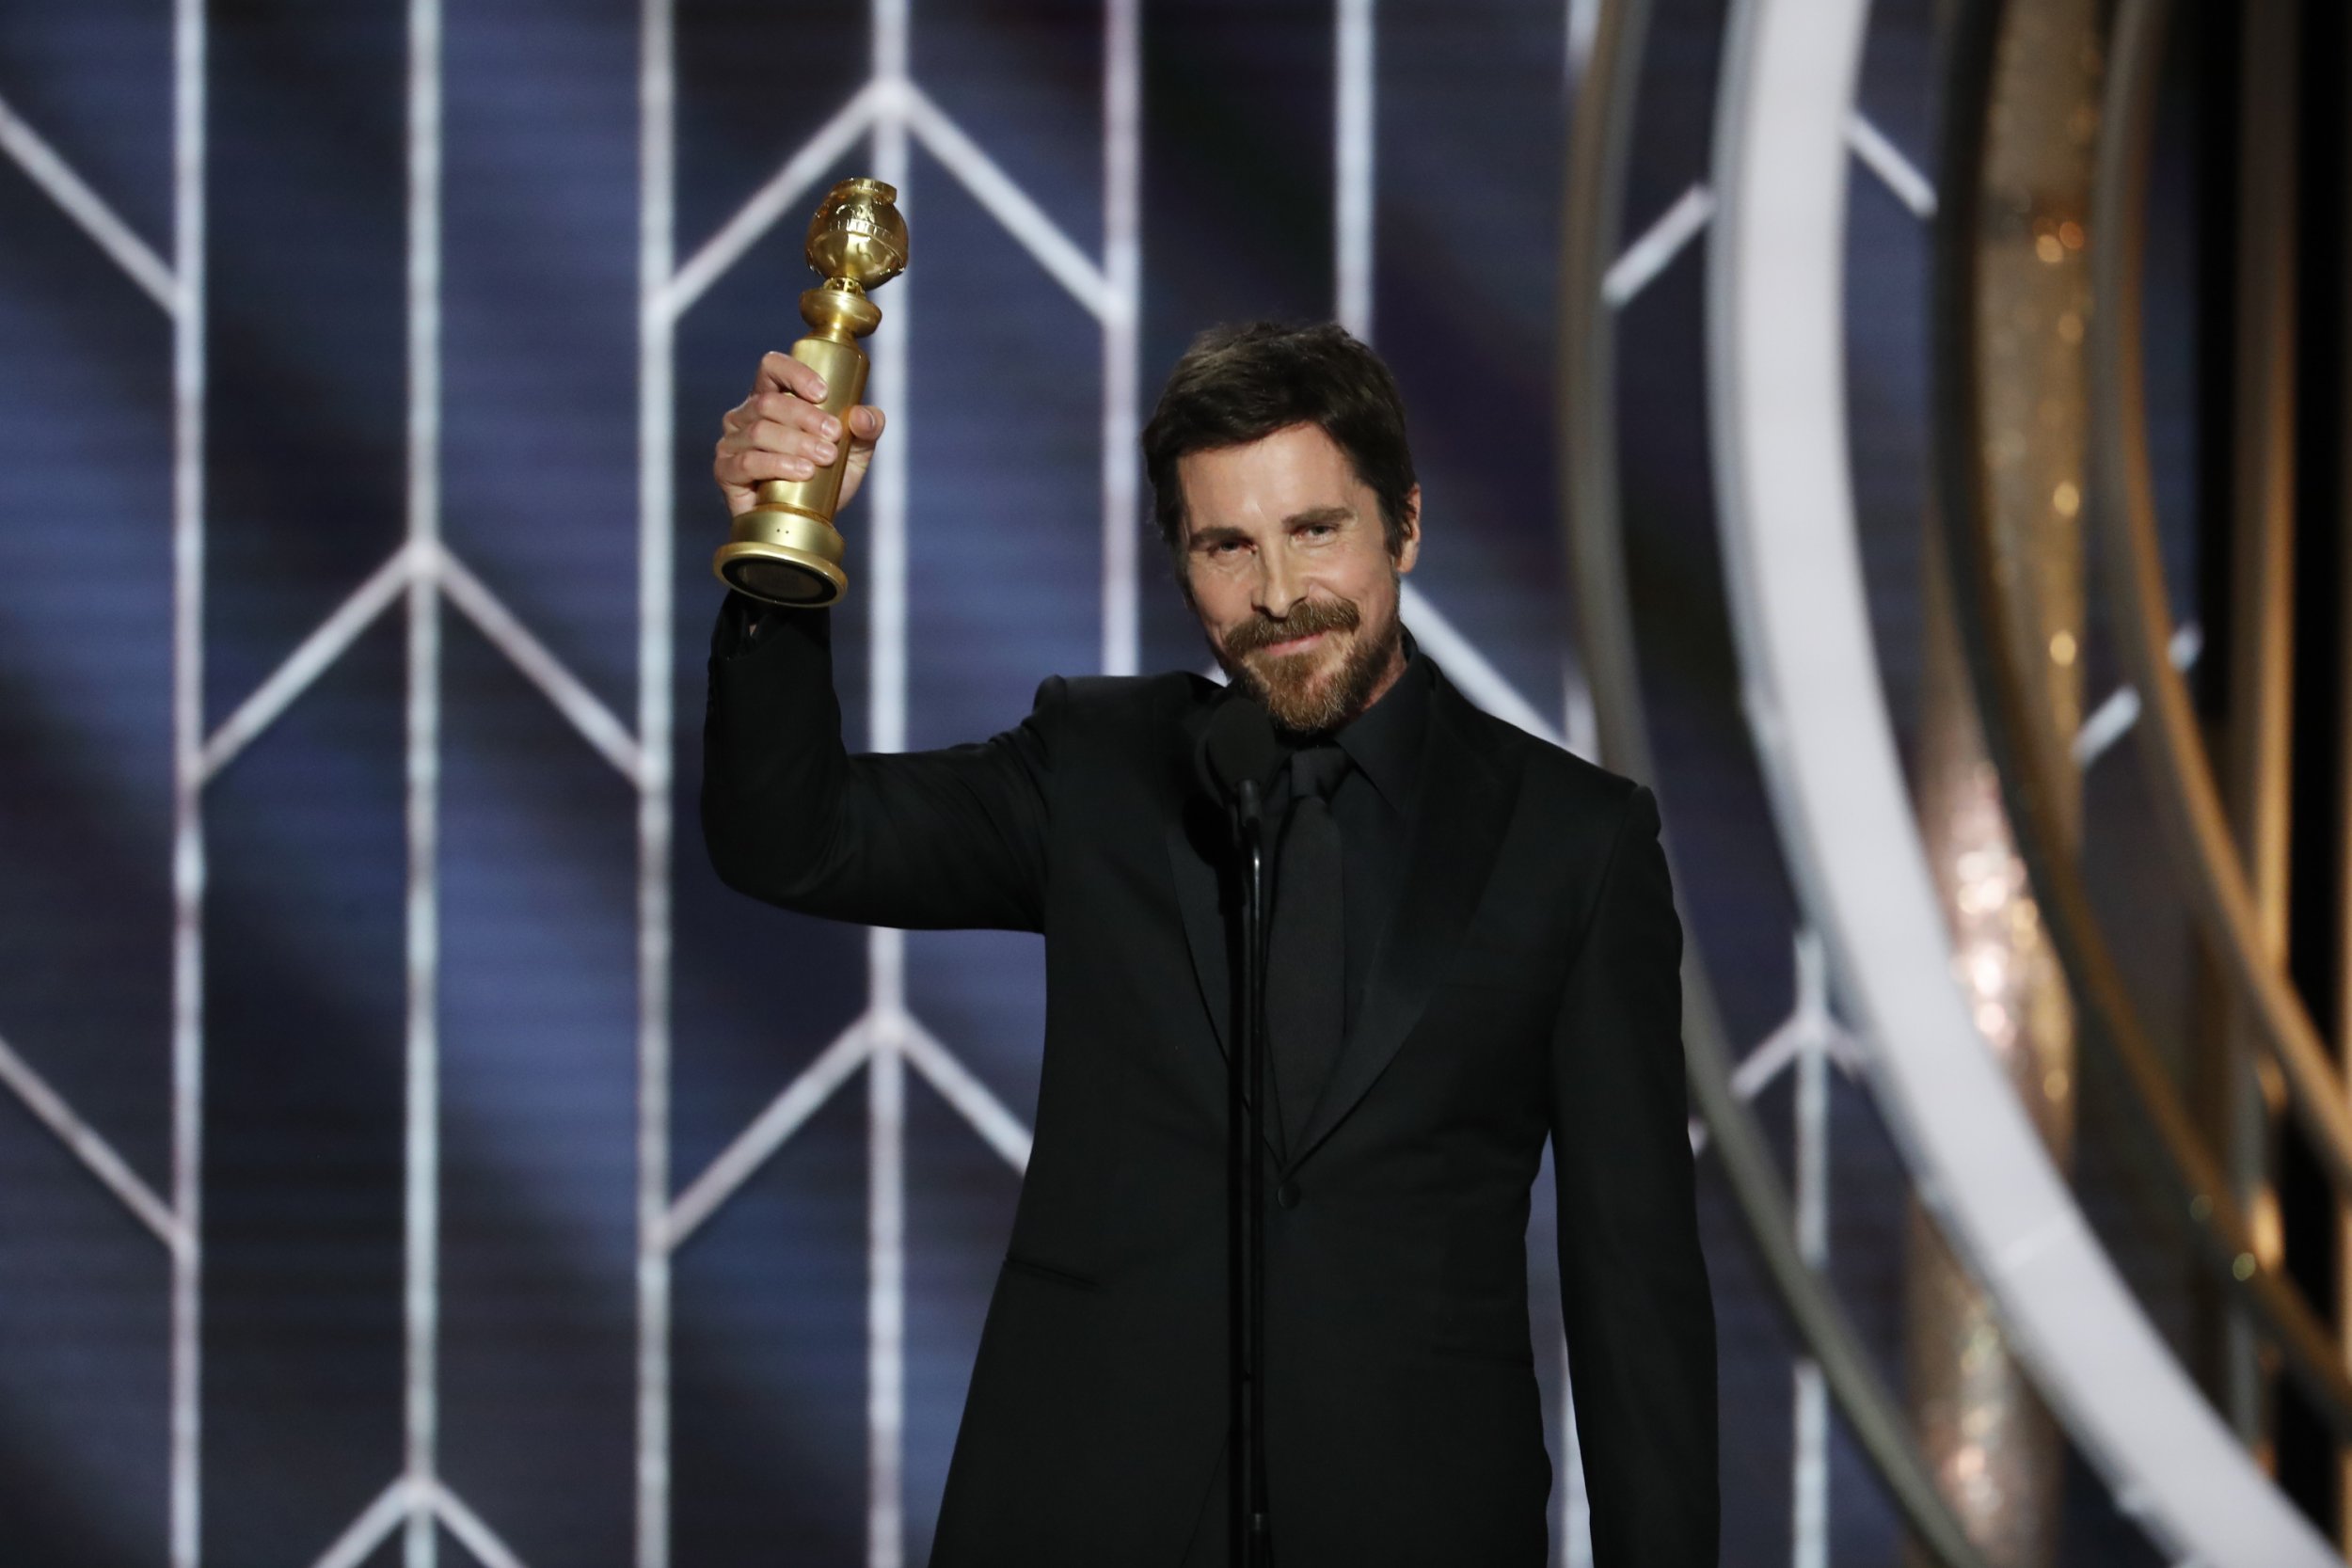 Christian Bale's Nod to Satan in Golden Globes Acceptance Speech Was